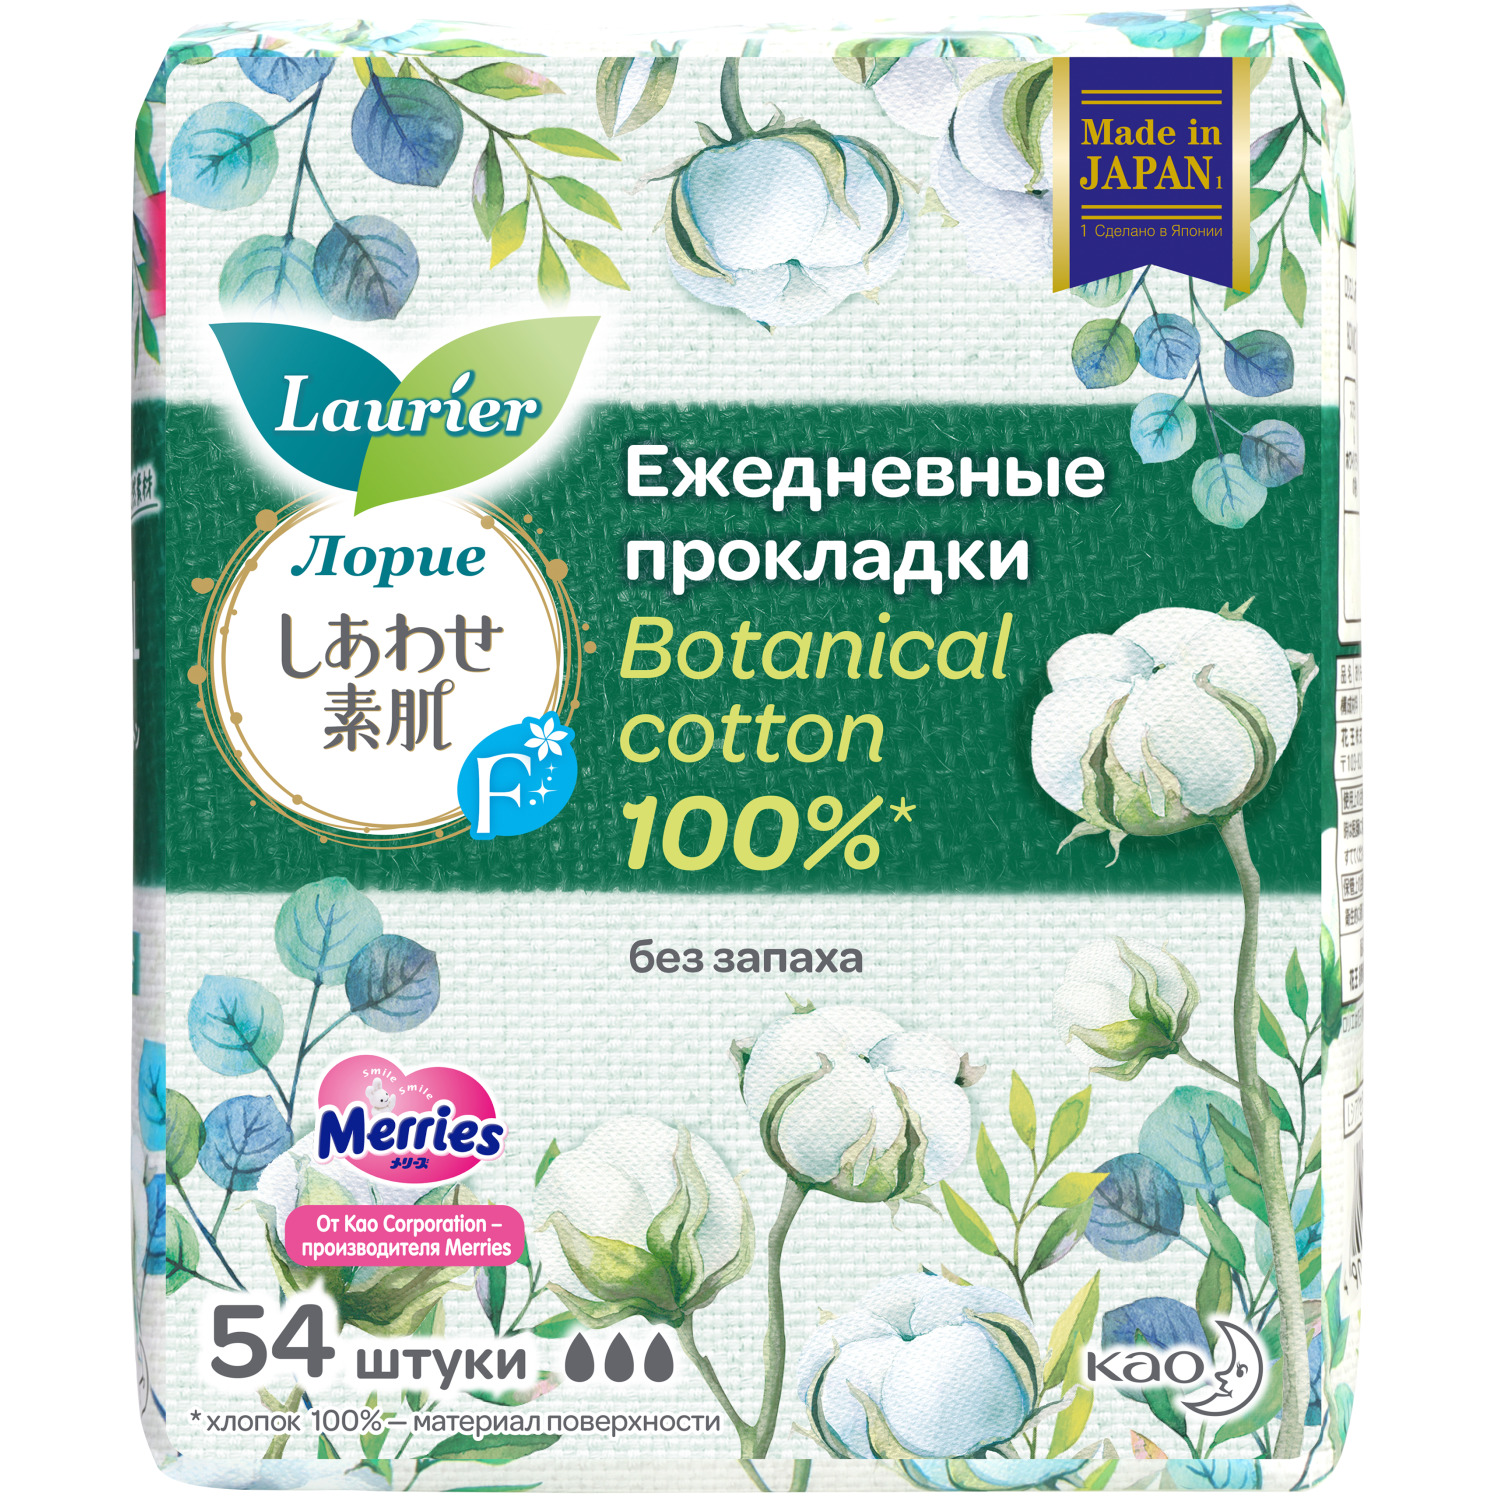 Женские гигиенические прокладки Laurier F Botanical Cotton  без запаха, 54 шт